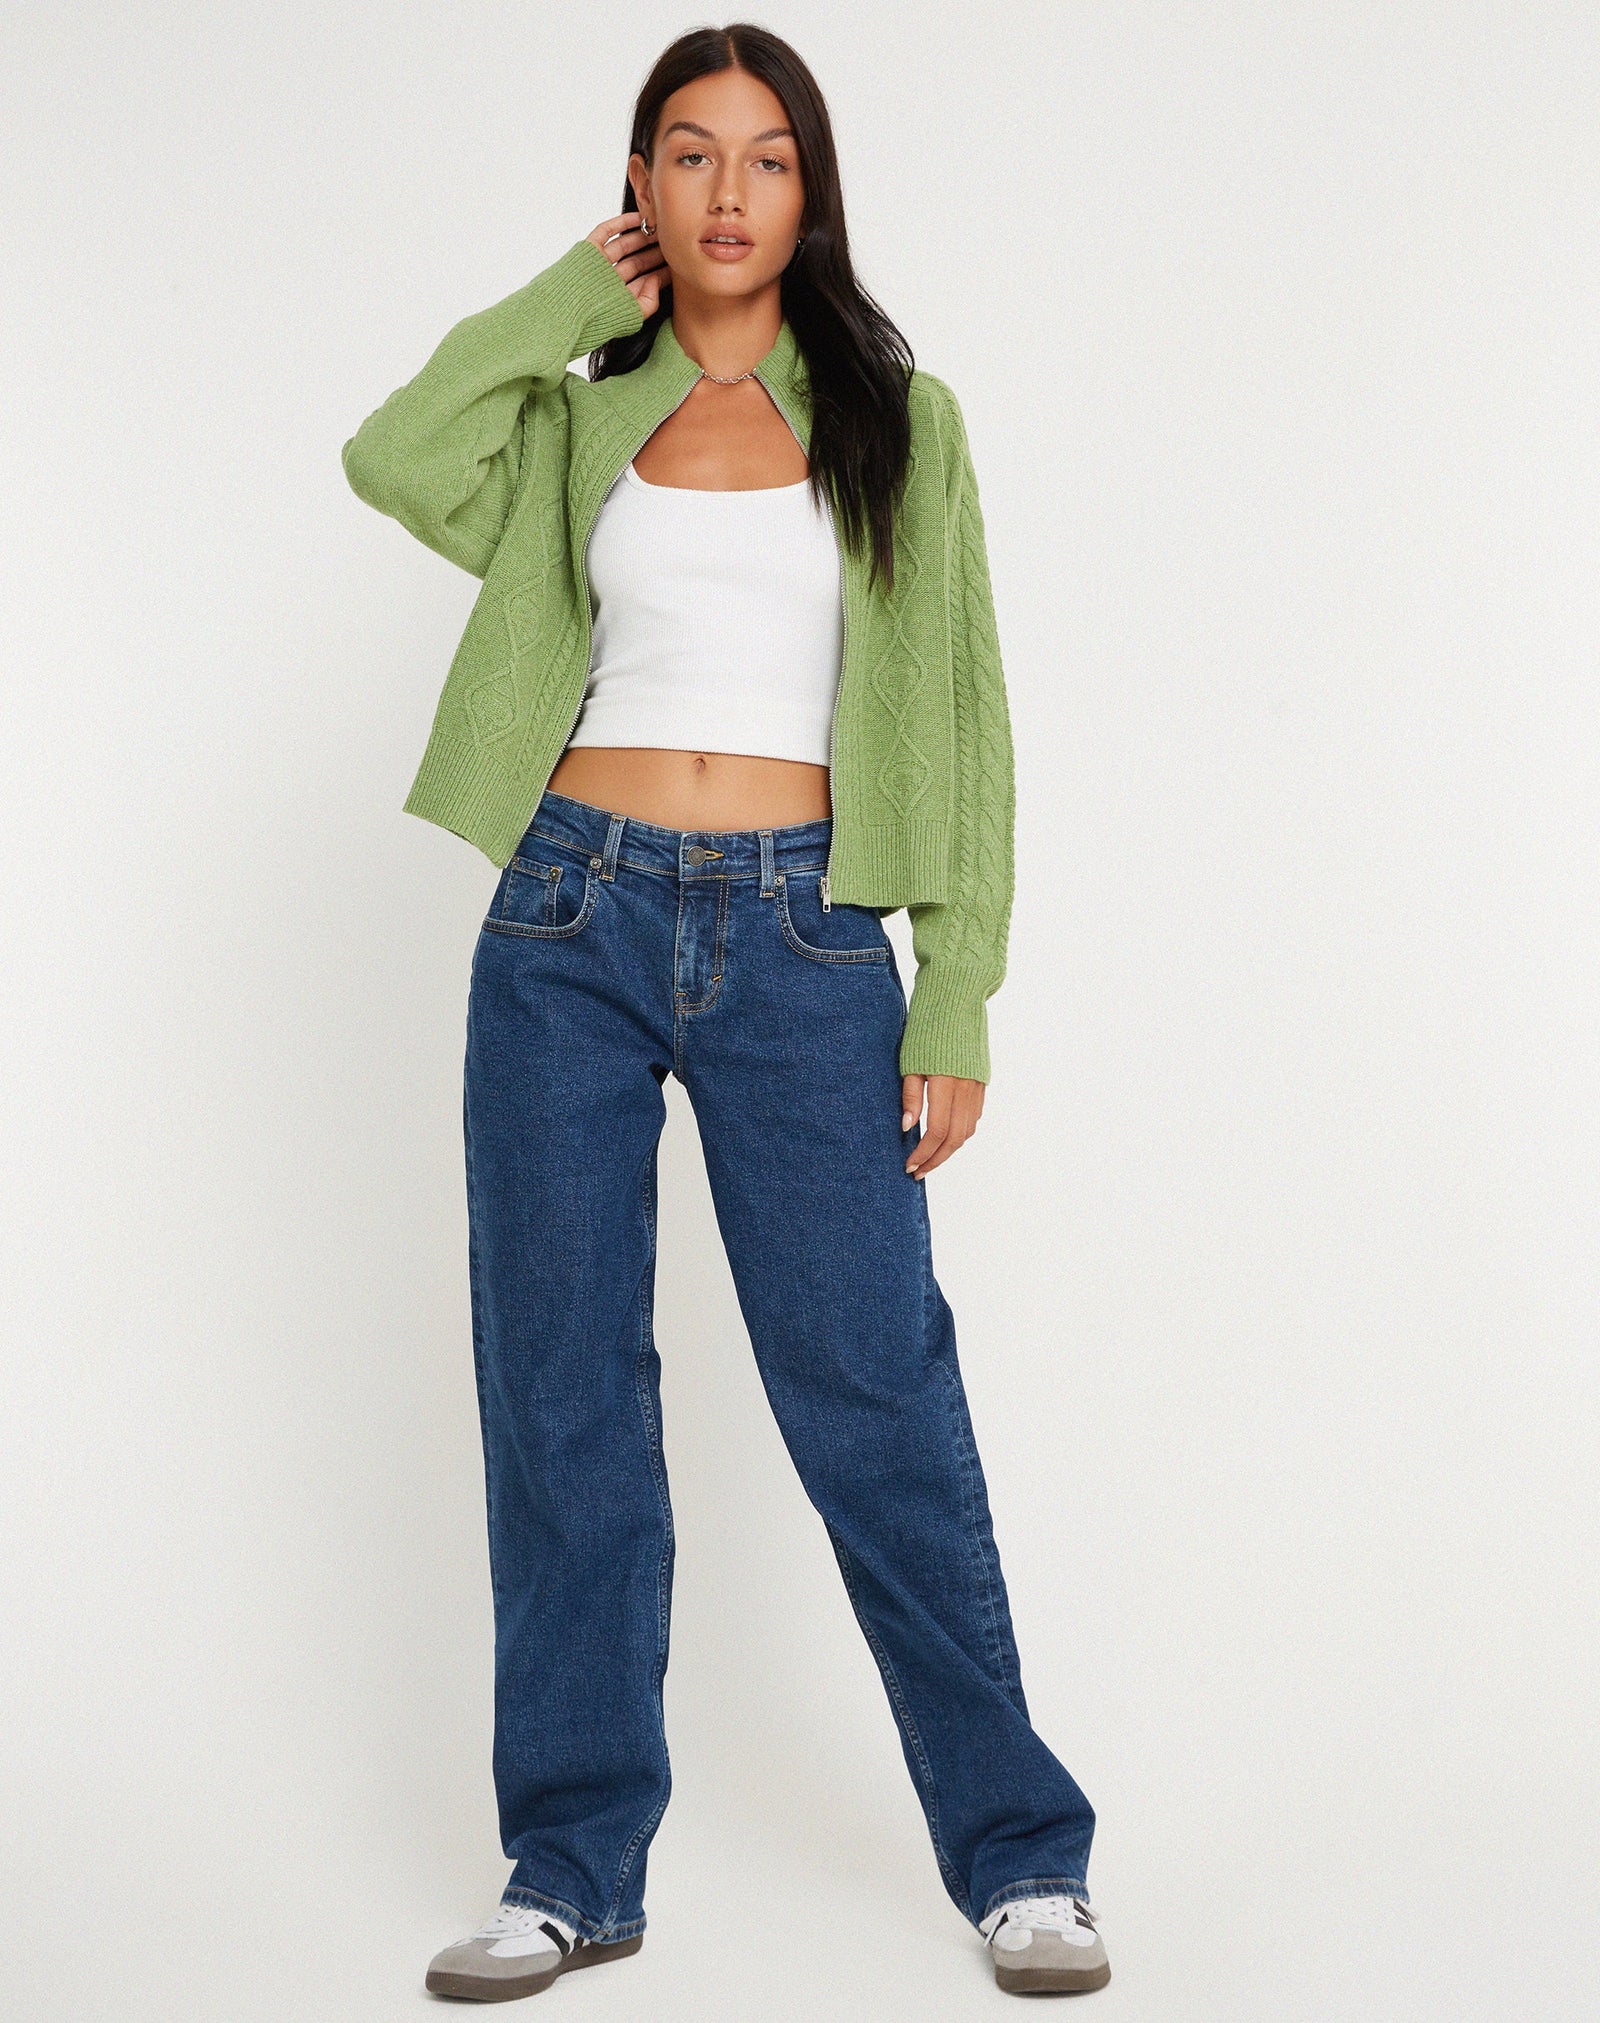 Moss Green Knitted Zip | Lemila – motelrocks-com-us